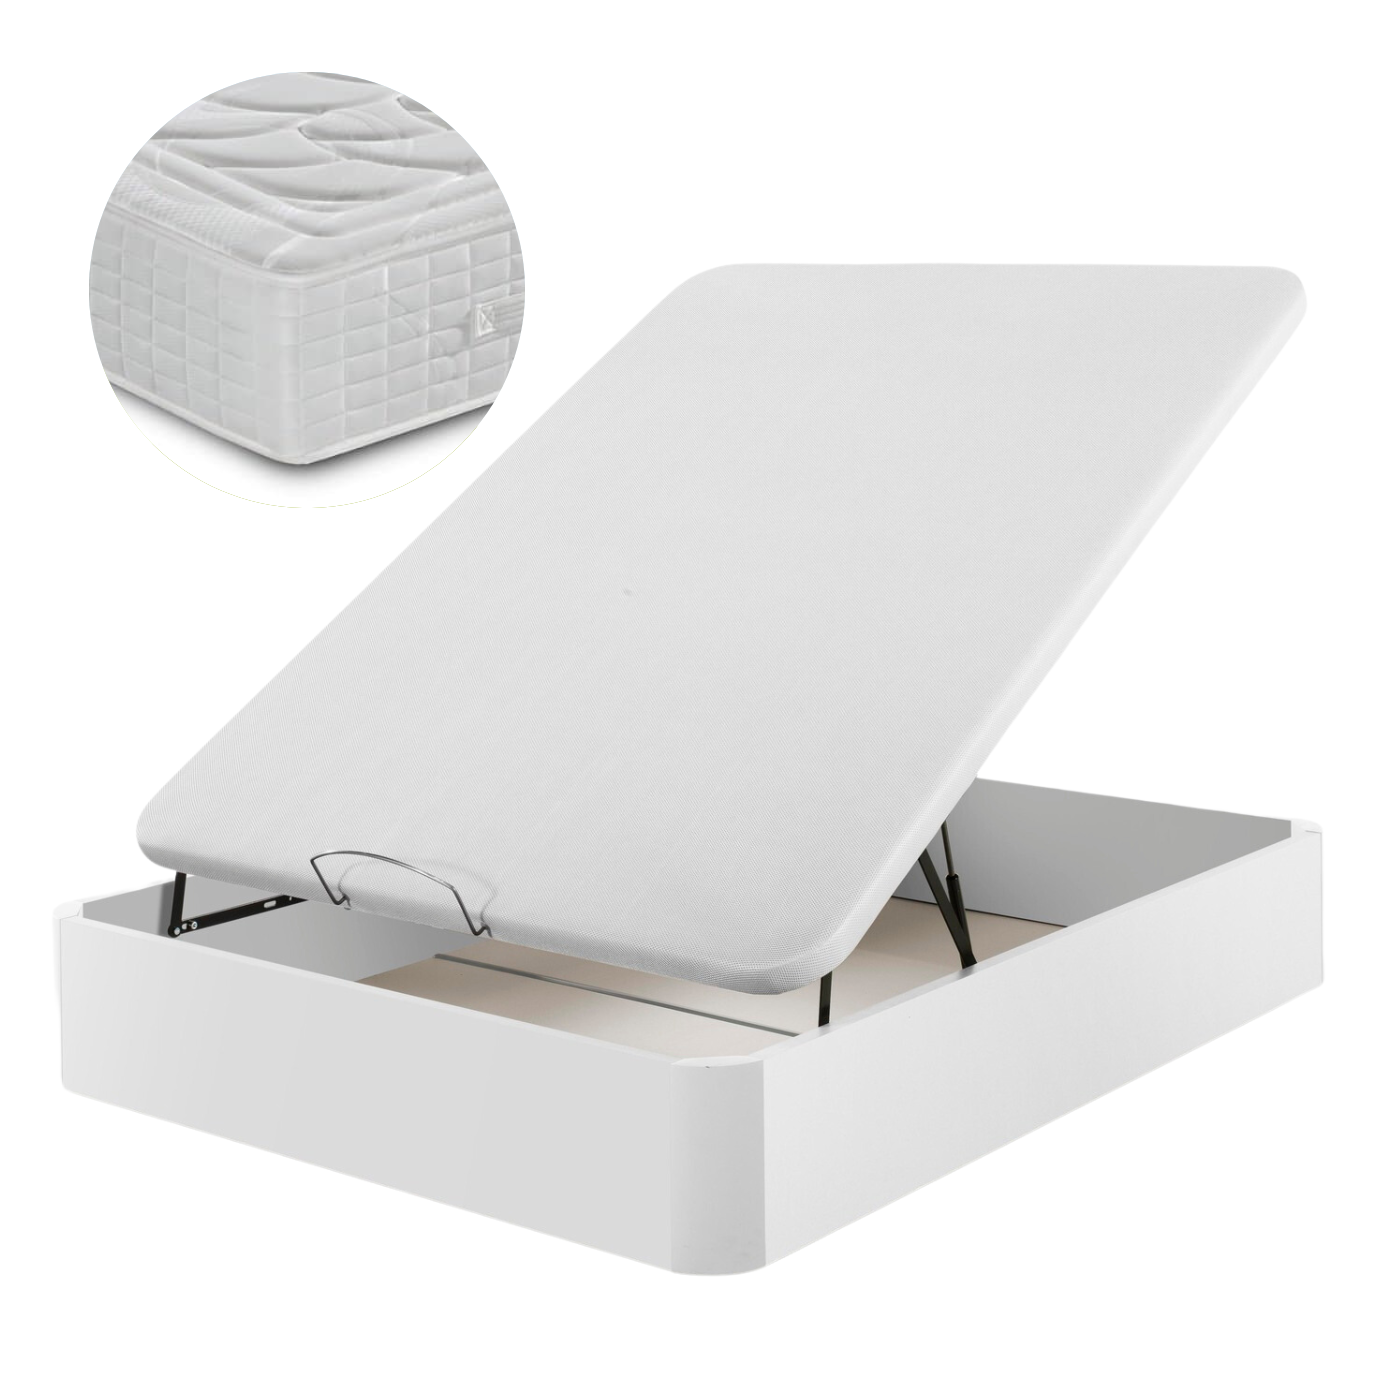 Wooden Canapé Pack + Paris spring mattress + Pillow Gift | WHITE